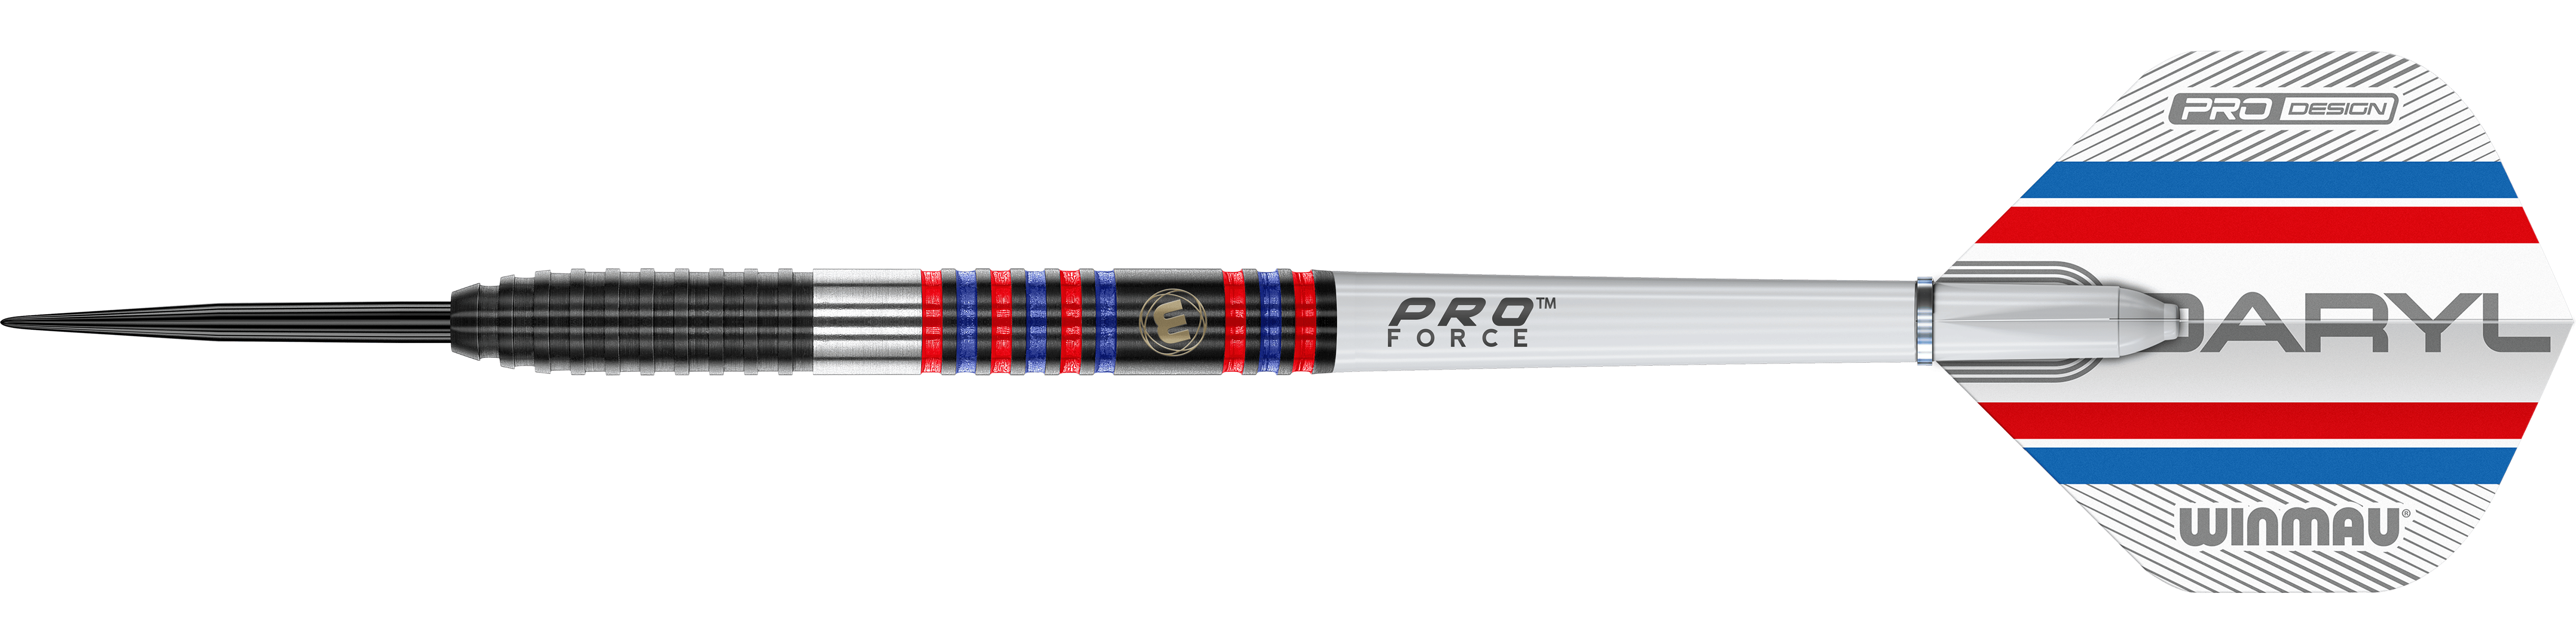 Winmau Daryl Gurney 85 Pro-Series Steeldarts